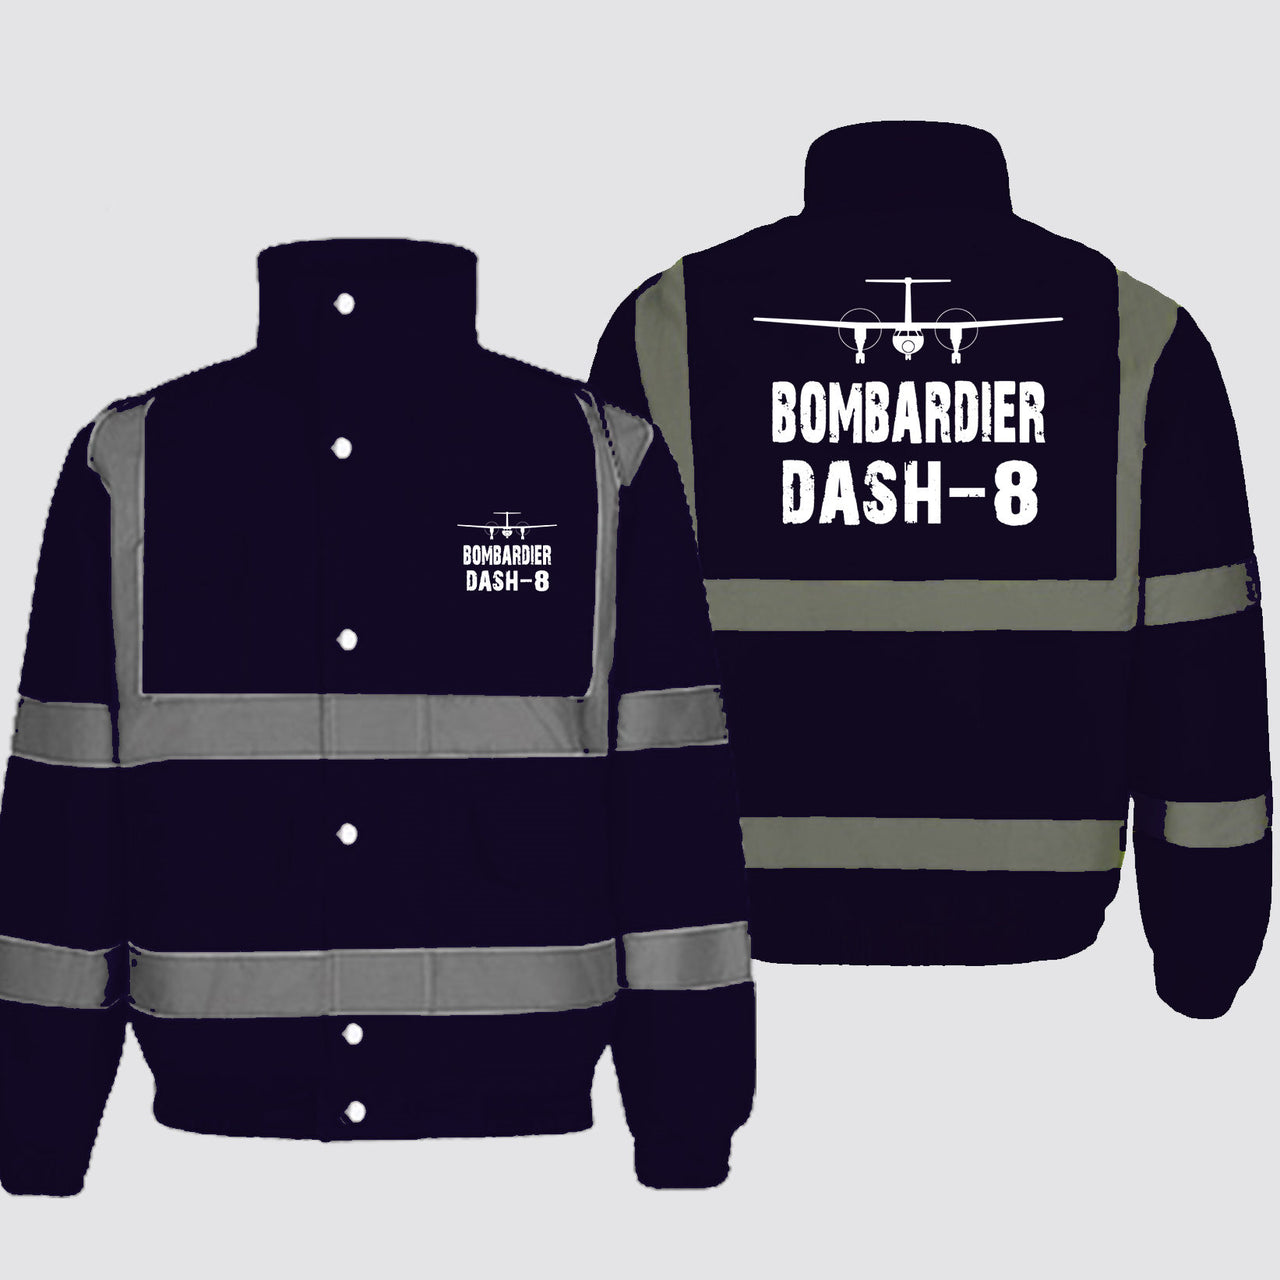 Bombardier Dash-8 & Plane Designed Reflective Winter Jackets